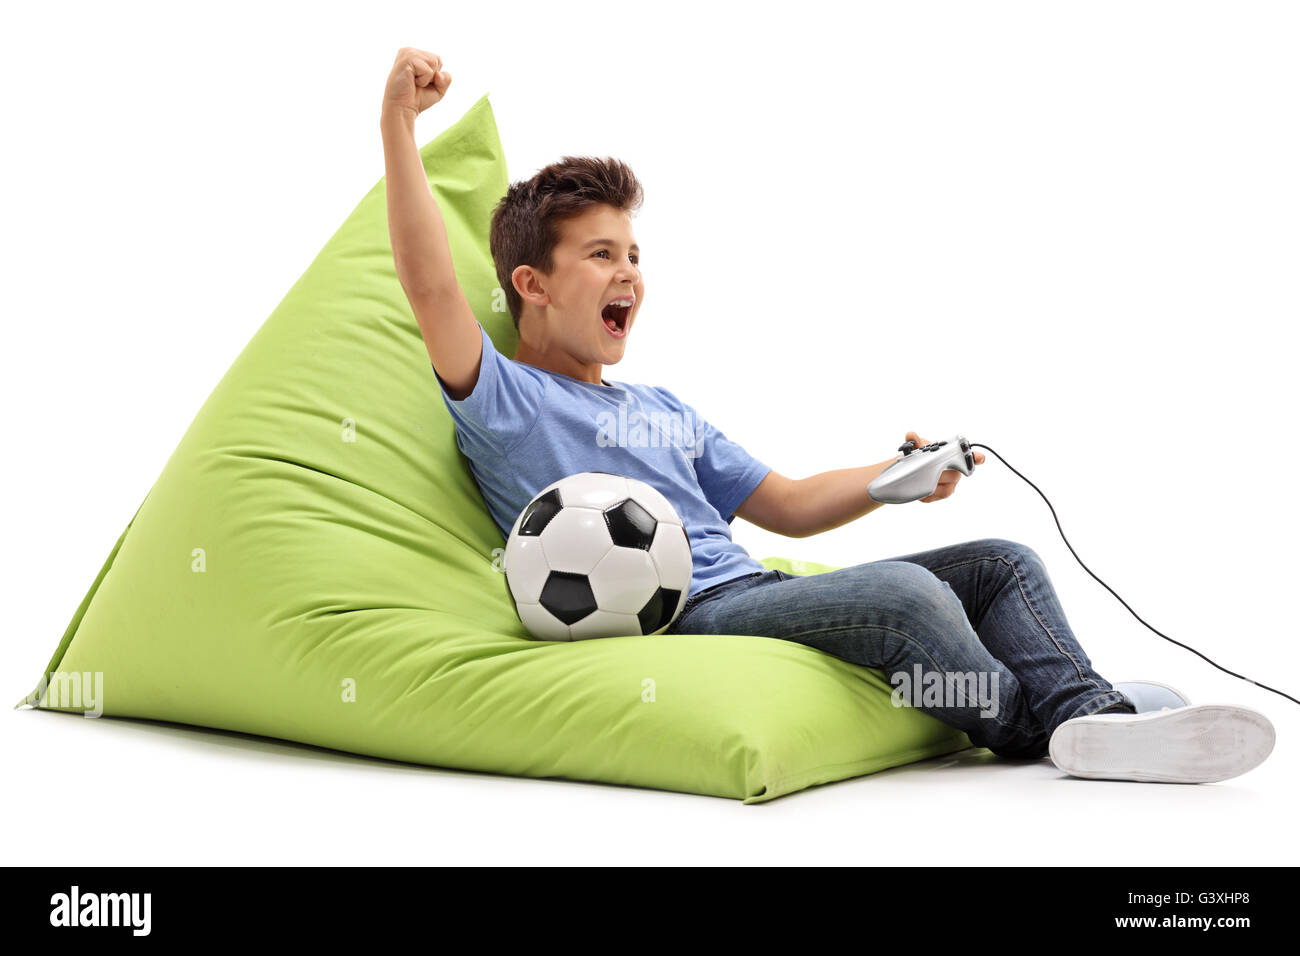 Joyful kid playing football video game and celebrating a goal isolated on white background Stock Photo